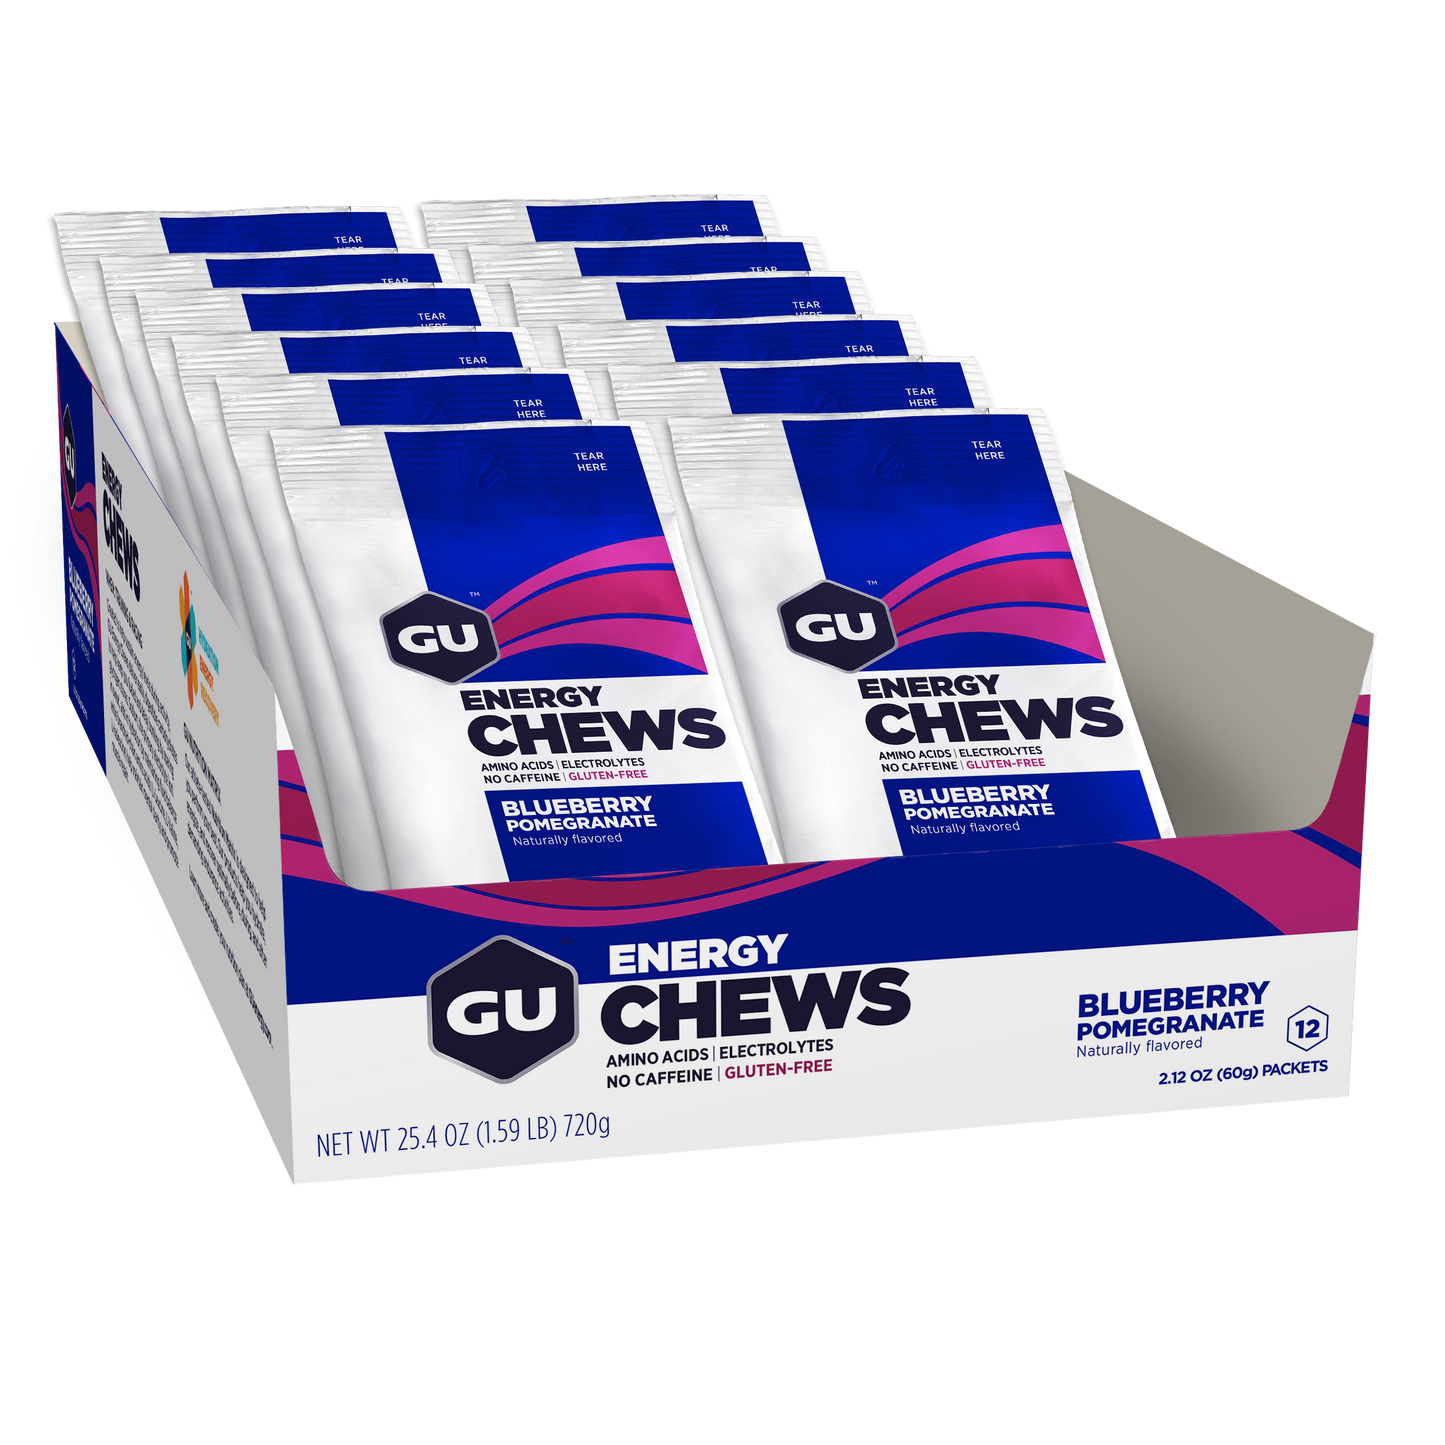 GU Chews (Box of 12) Best Before